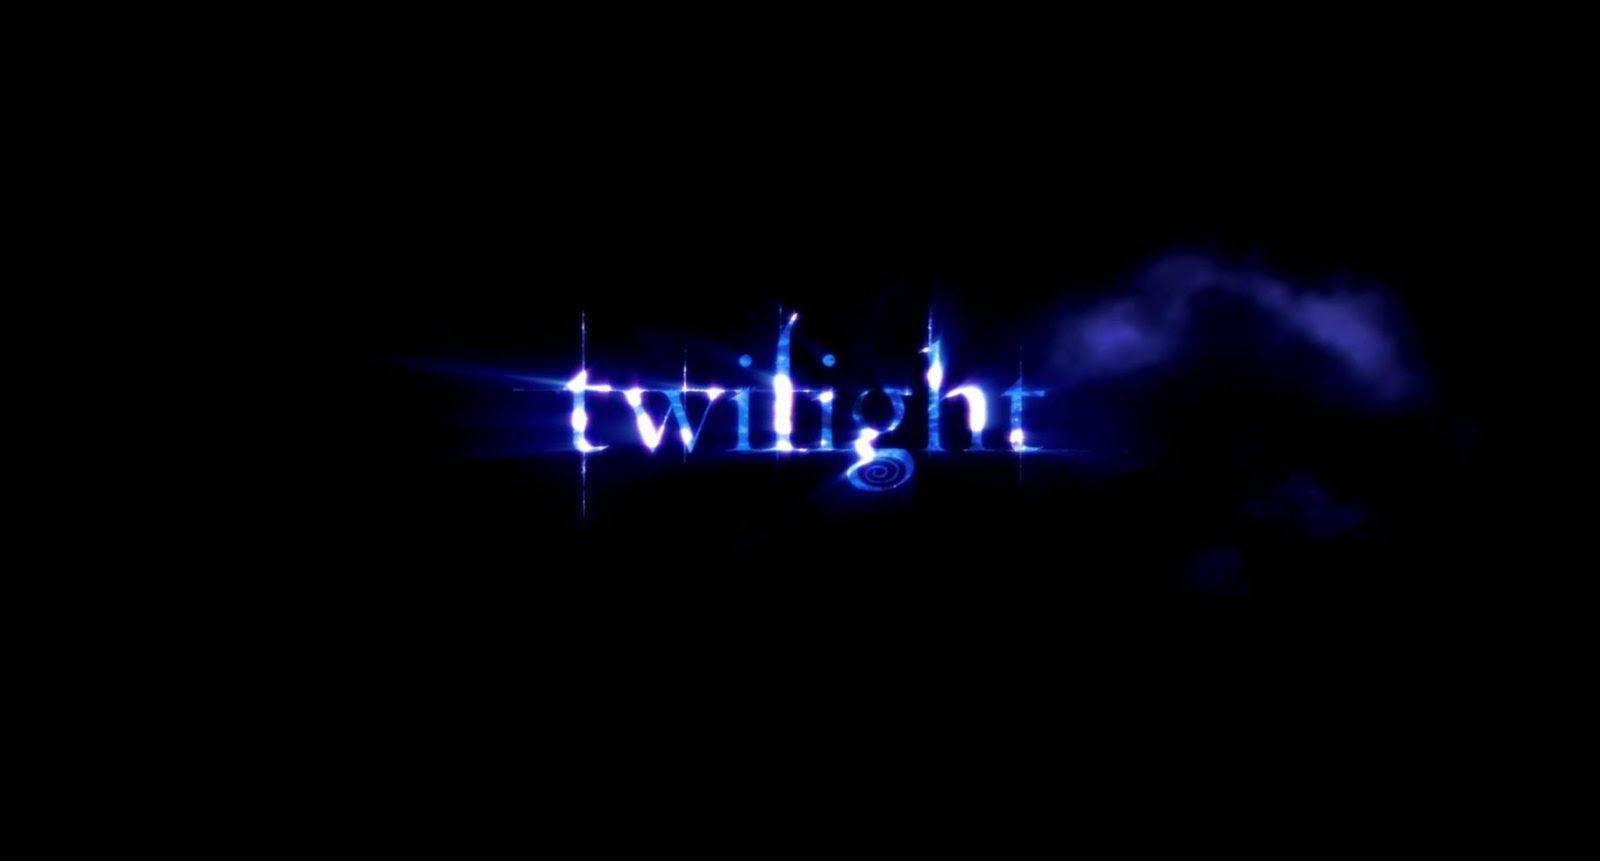 Twlight Logo - Twilight Wallpaper | Wallpapers Area